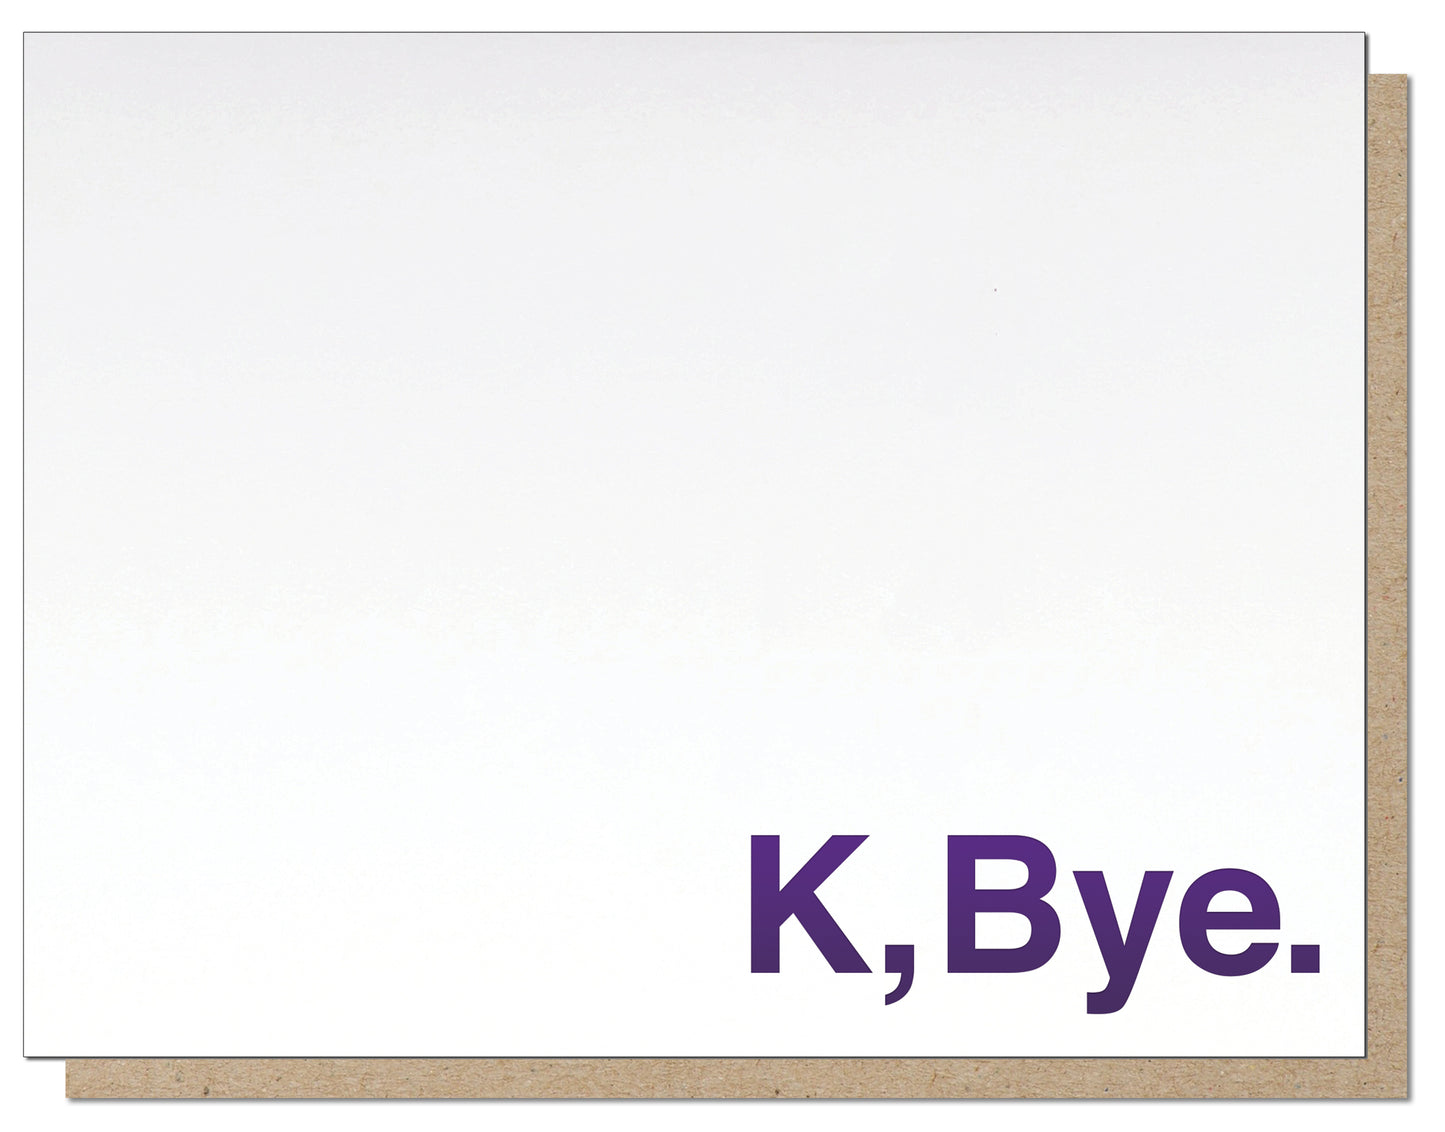 K, Bye. Minimalist Letterpress Greeting Card.